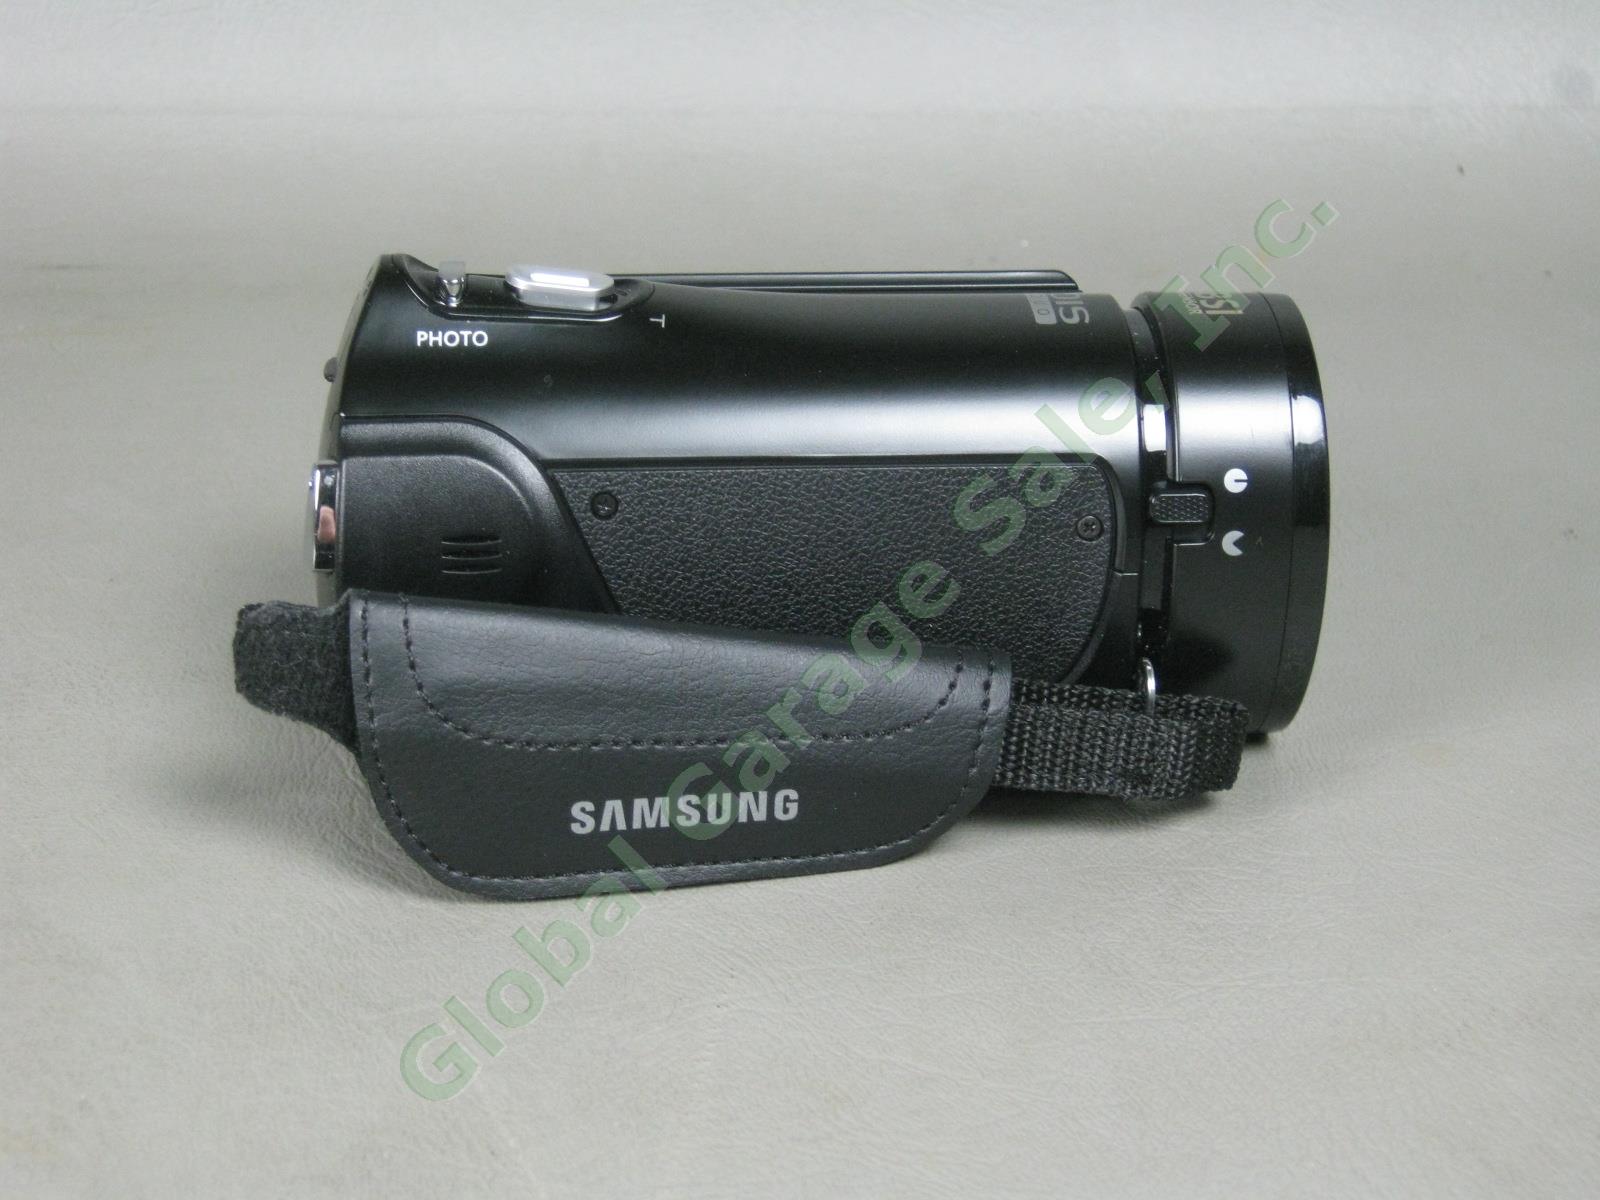 Samsung Full HD 1920x1080 1080i Camcorder HMX-H300BN/XAA Video Camera MINT COND! 2